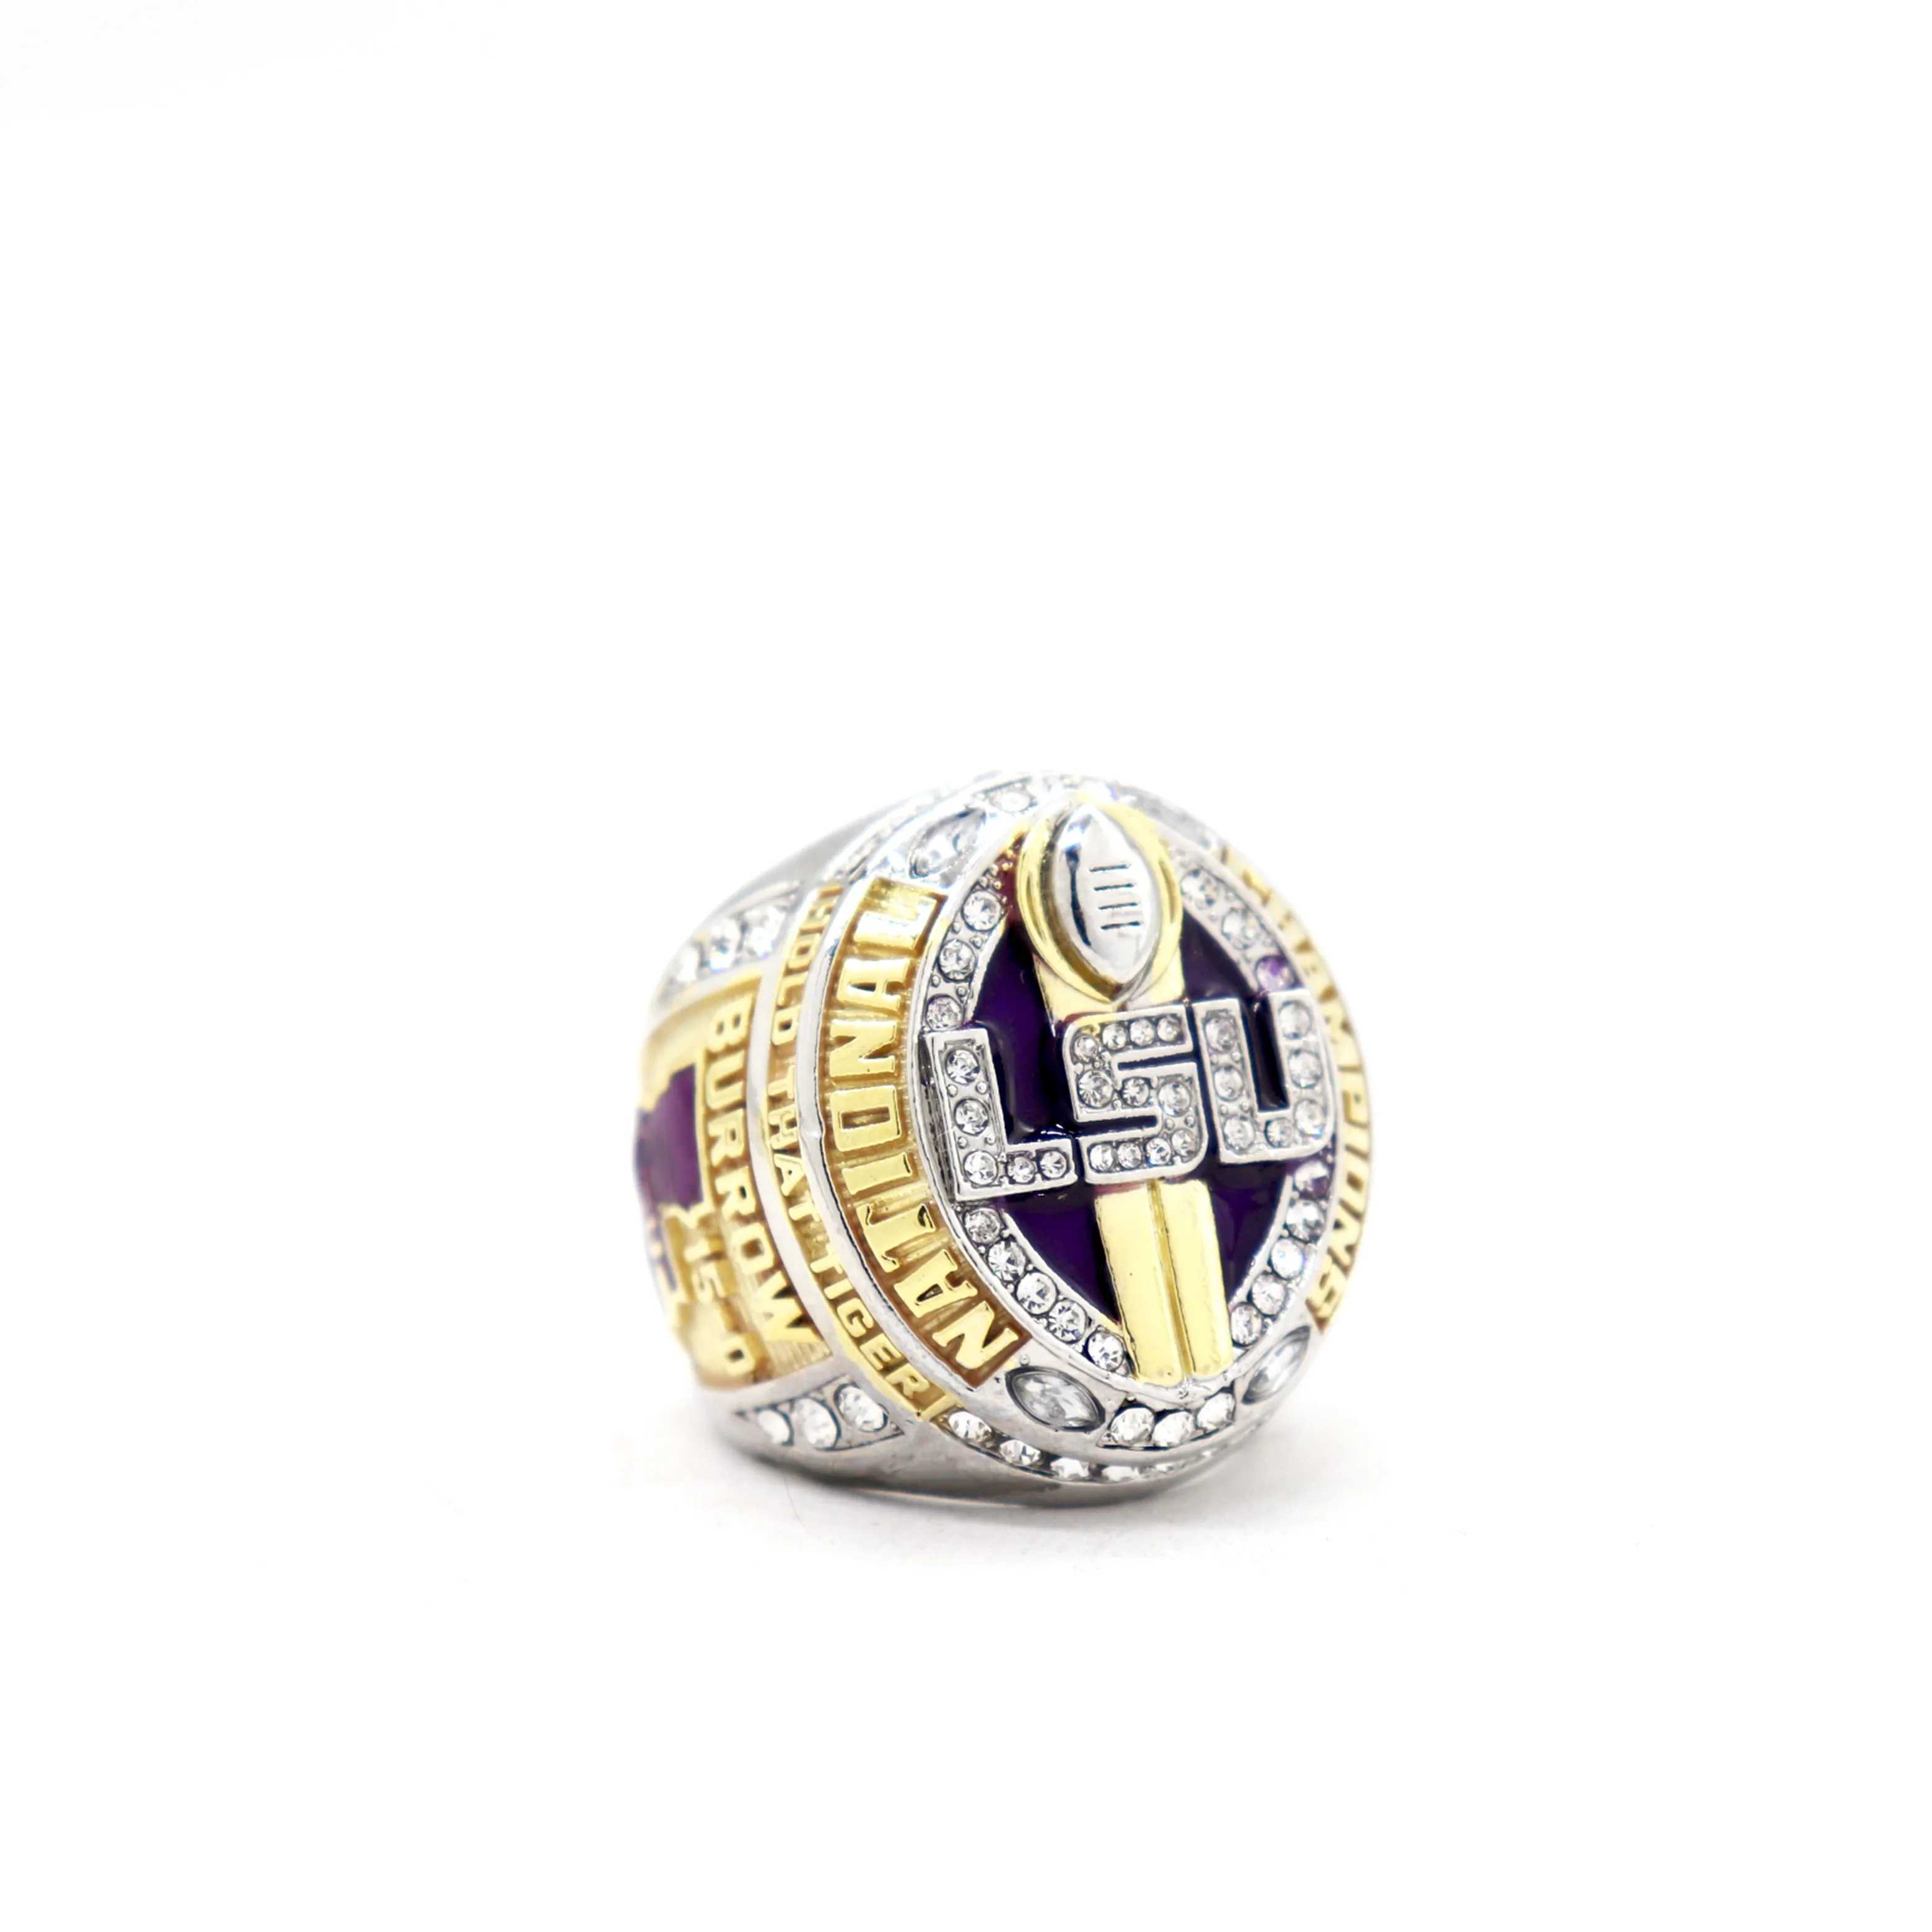 Designer Ring Gold Silver offical 2019 lsu nationals Championship Ring